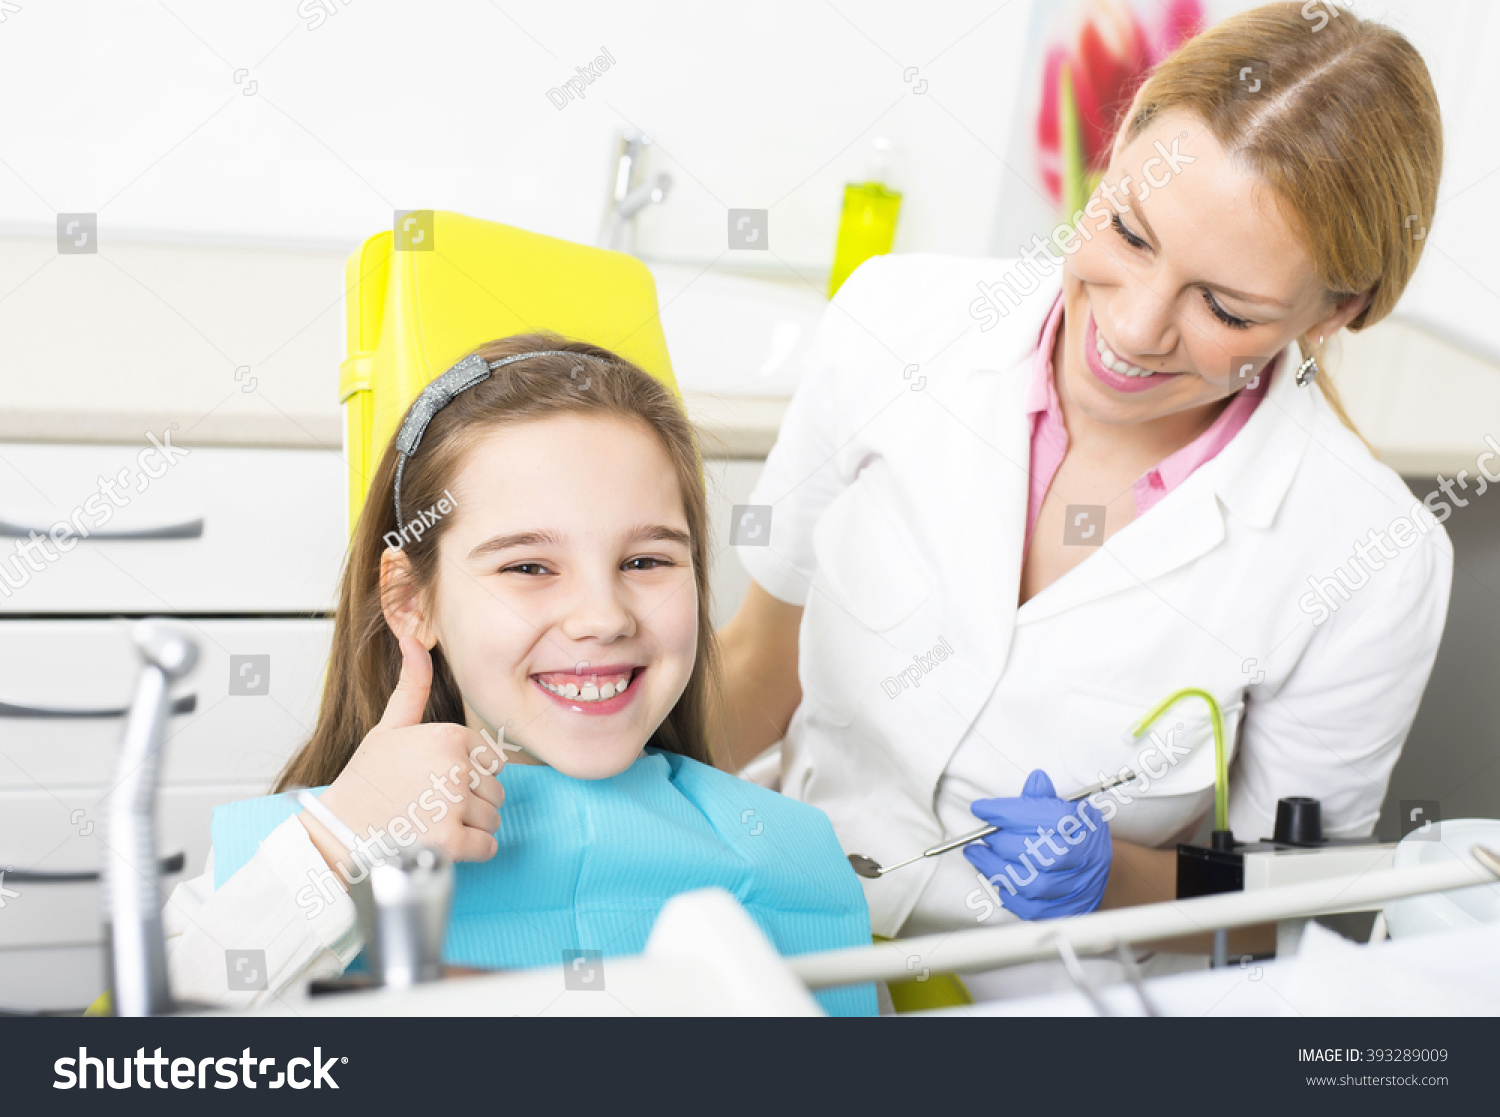 Посещение врача стоматолога. Стоматология дети. Детский стоматолог. Ребенок у стоматолога. Детский прием у стоматолога.